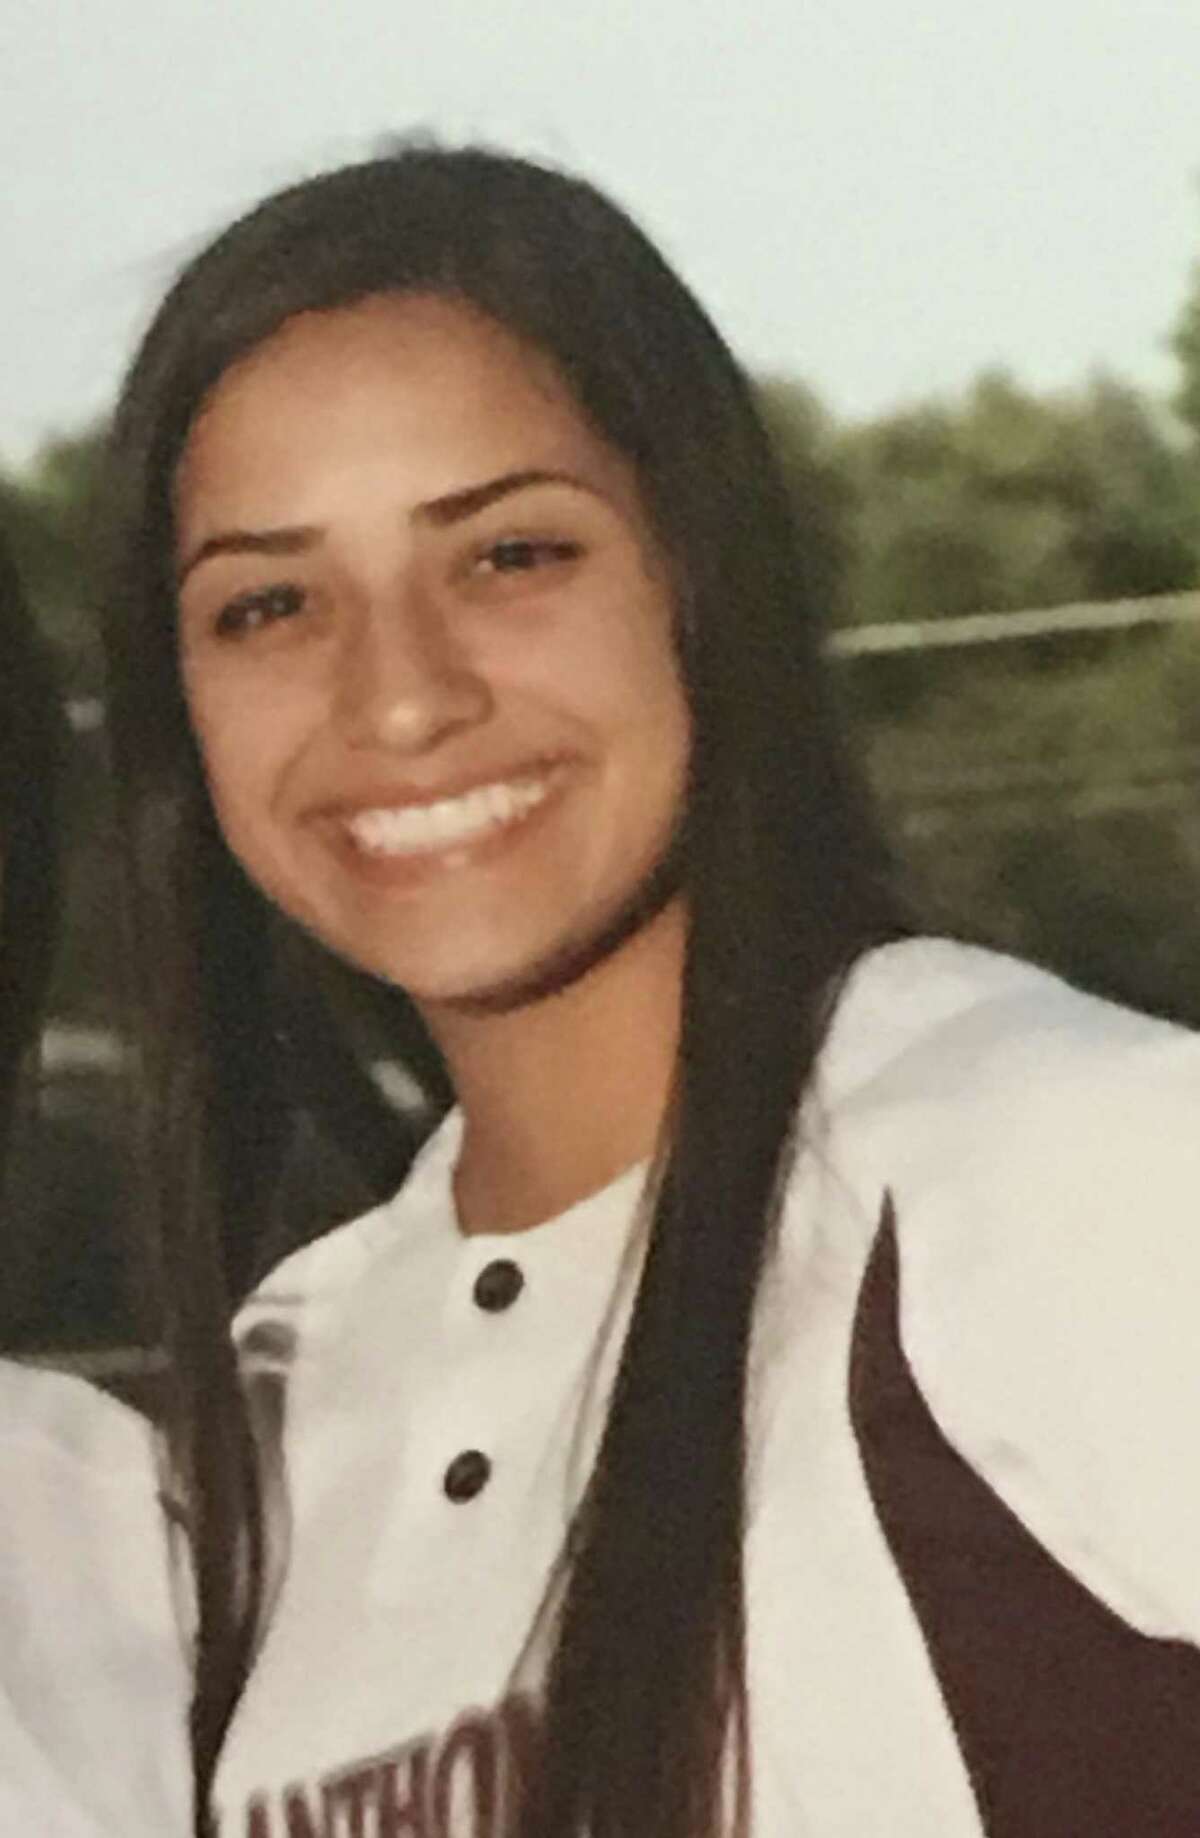 St. Anthony softball player Chloe Navarro in 2017.